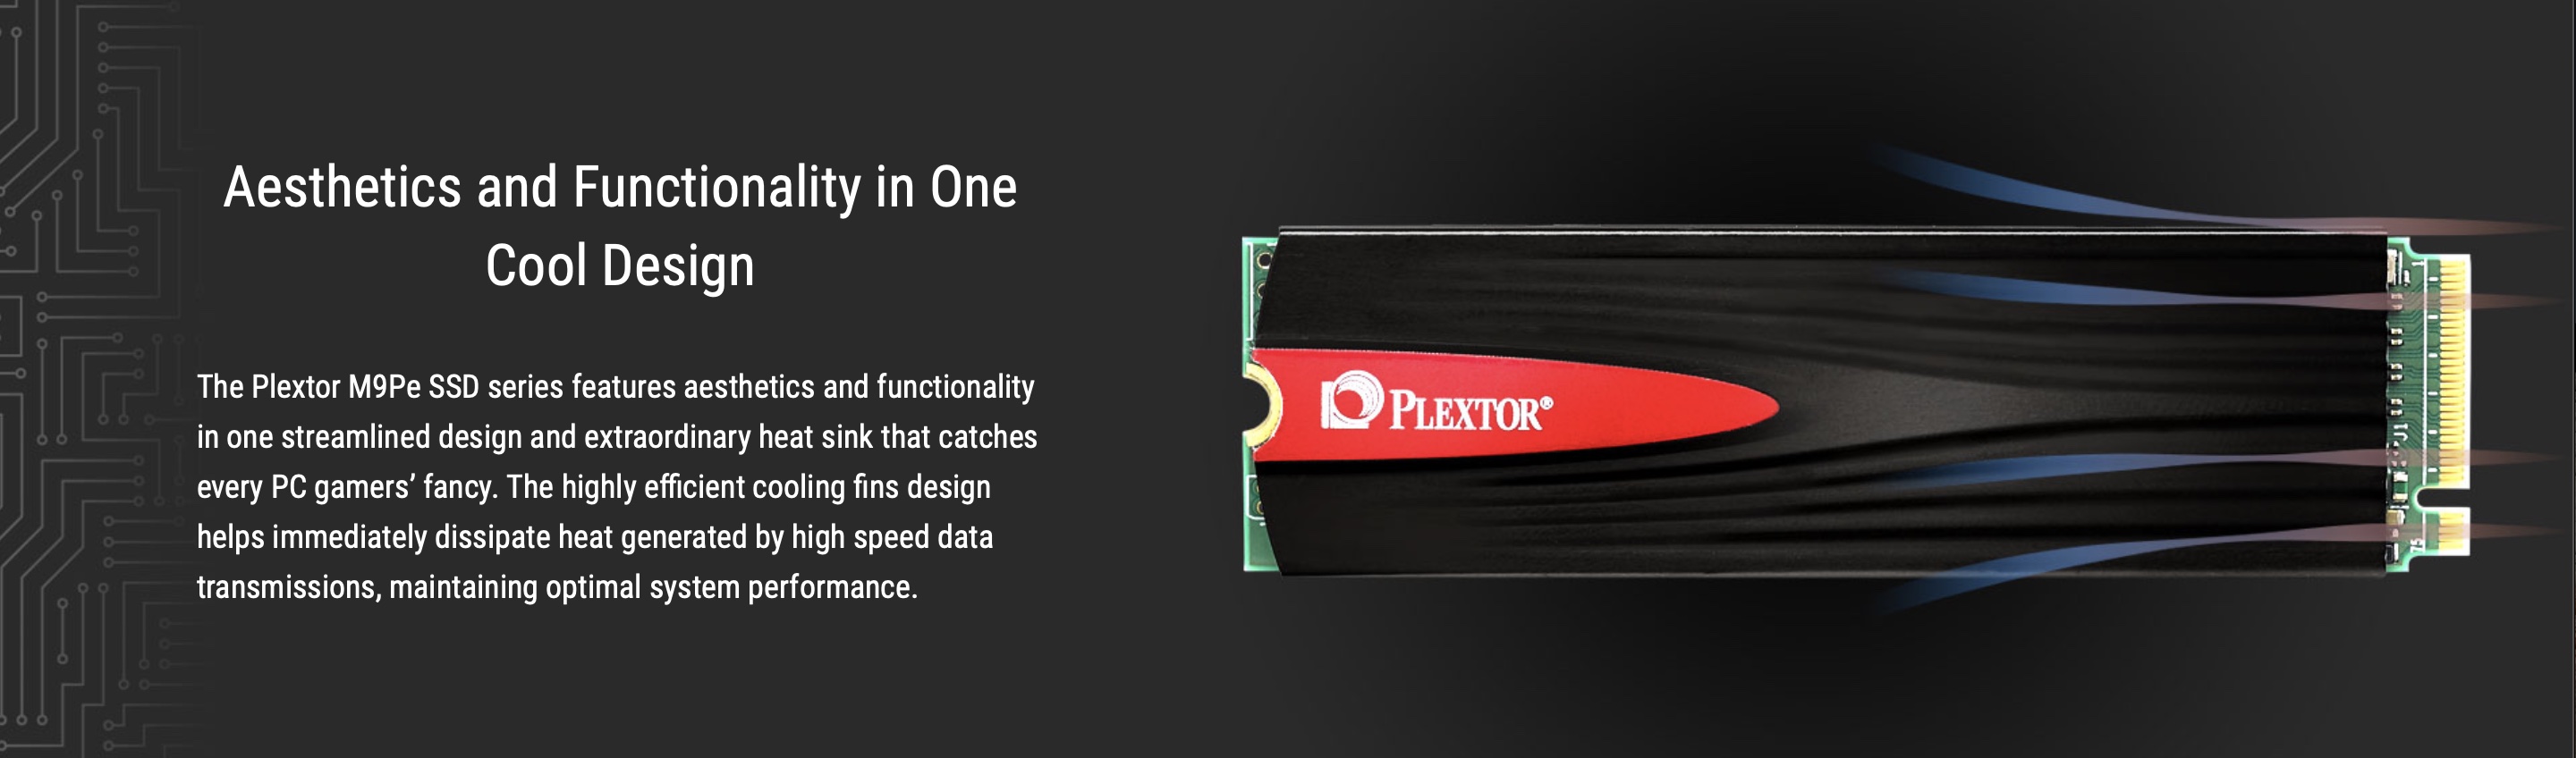 Ổ cứng SSD Plextor PX-1TM9PeG